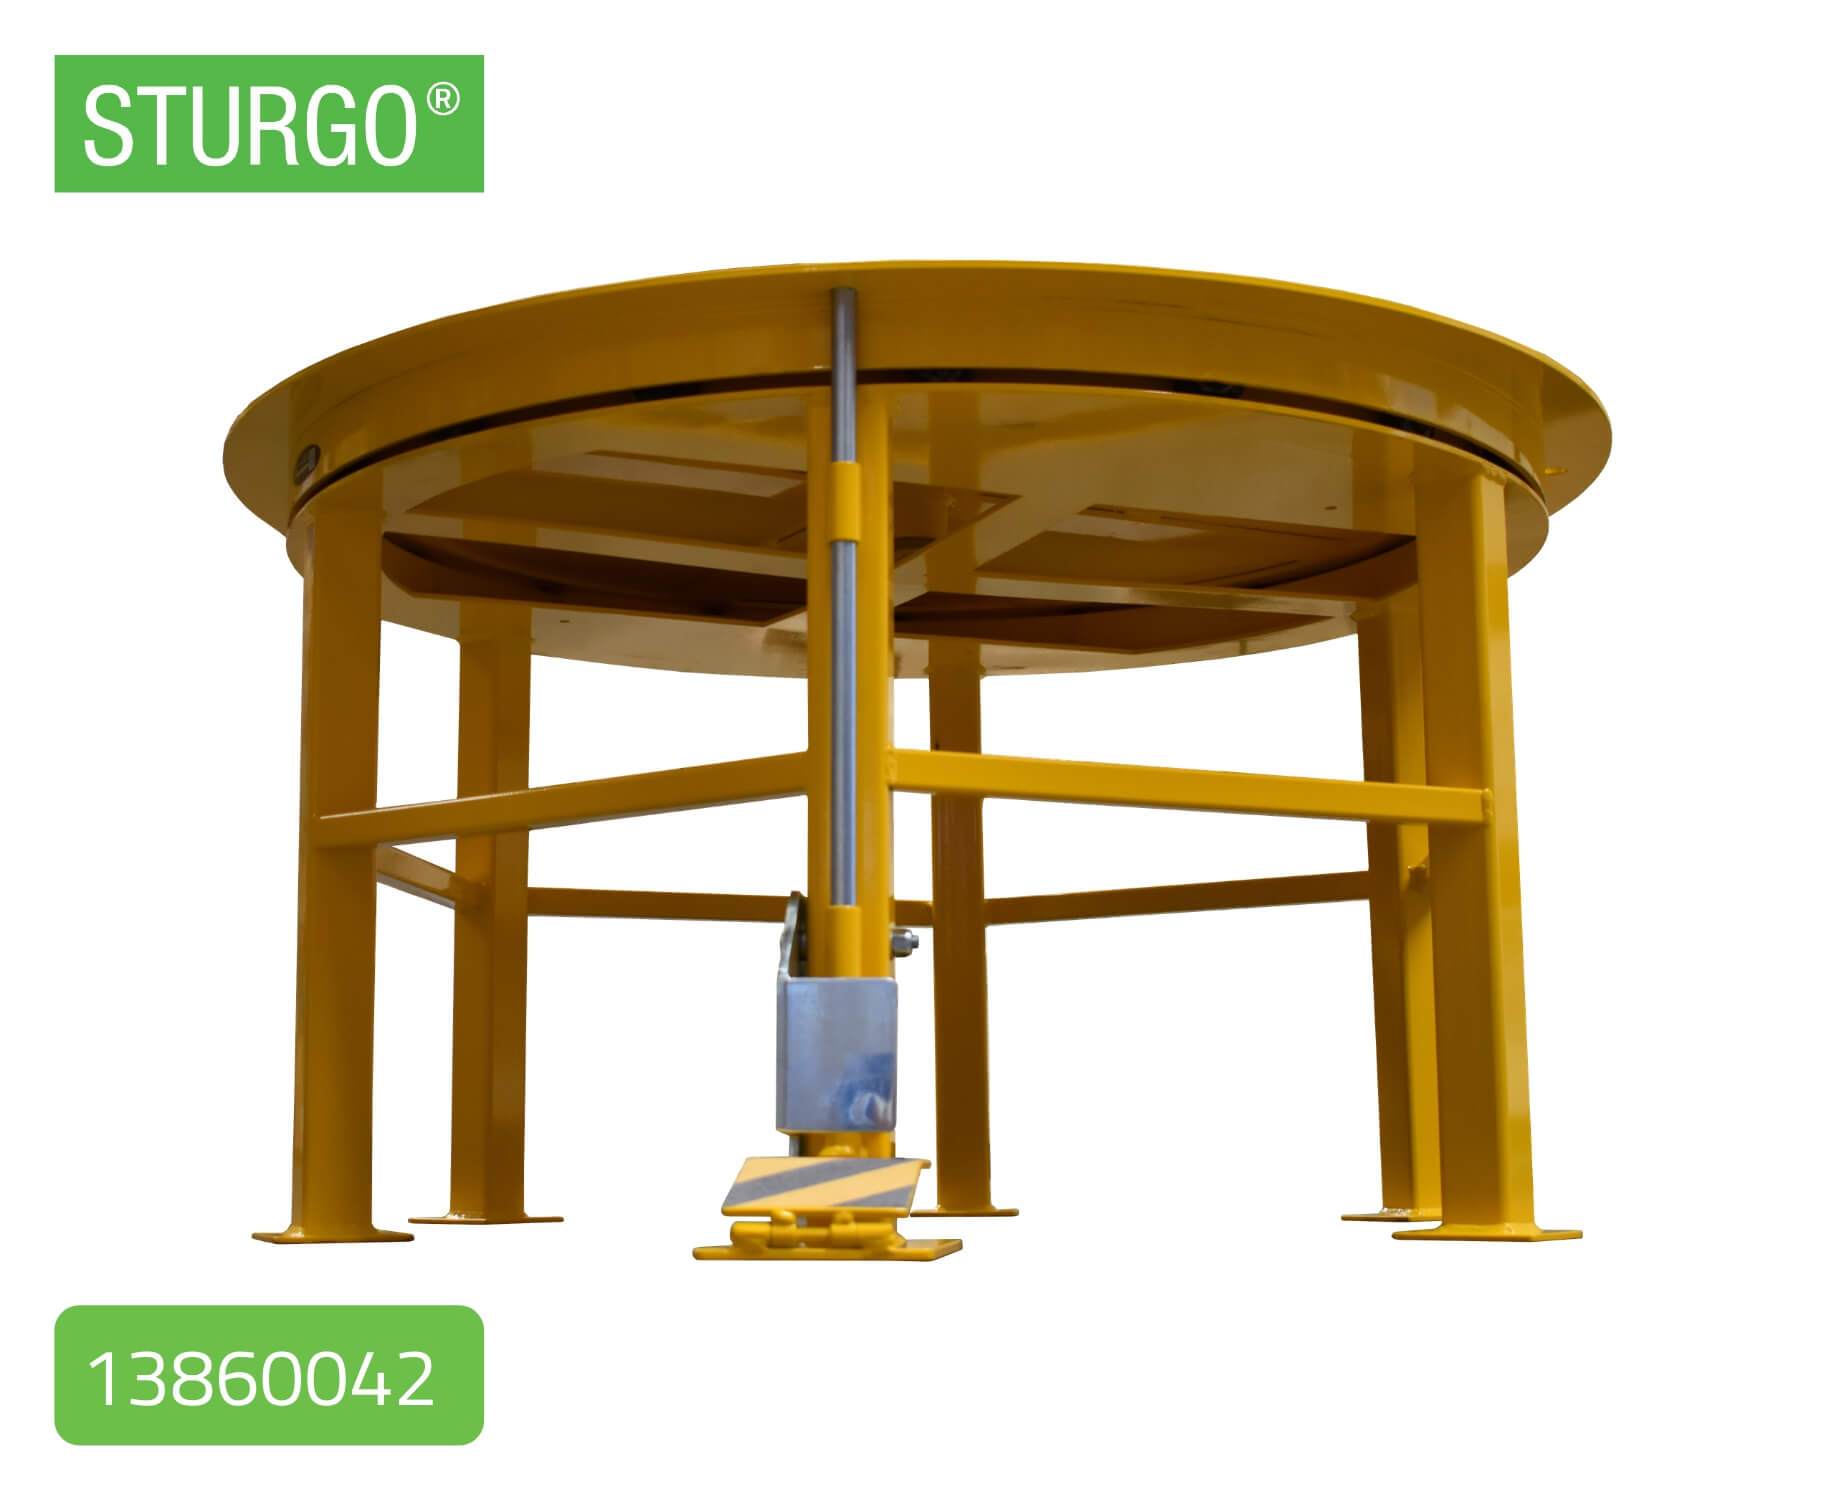 Custom STURGO® Pallet Stand & Rotator